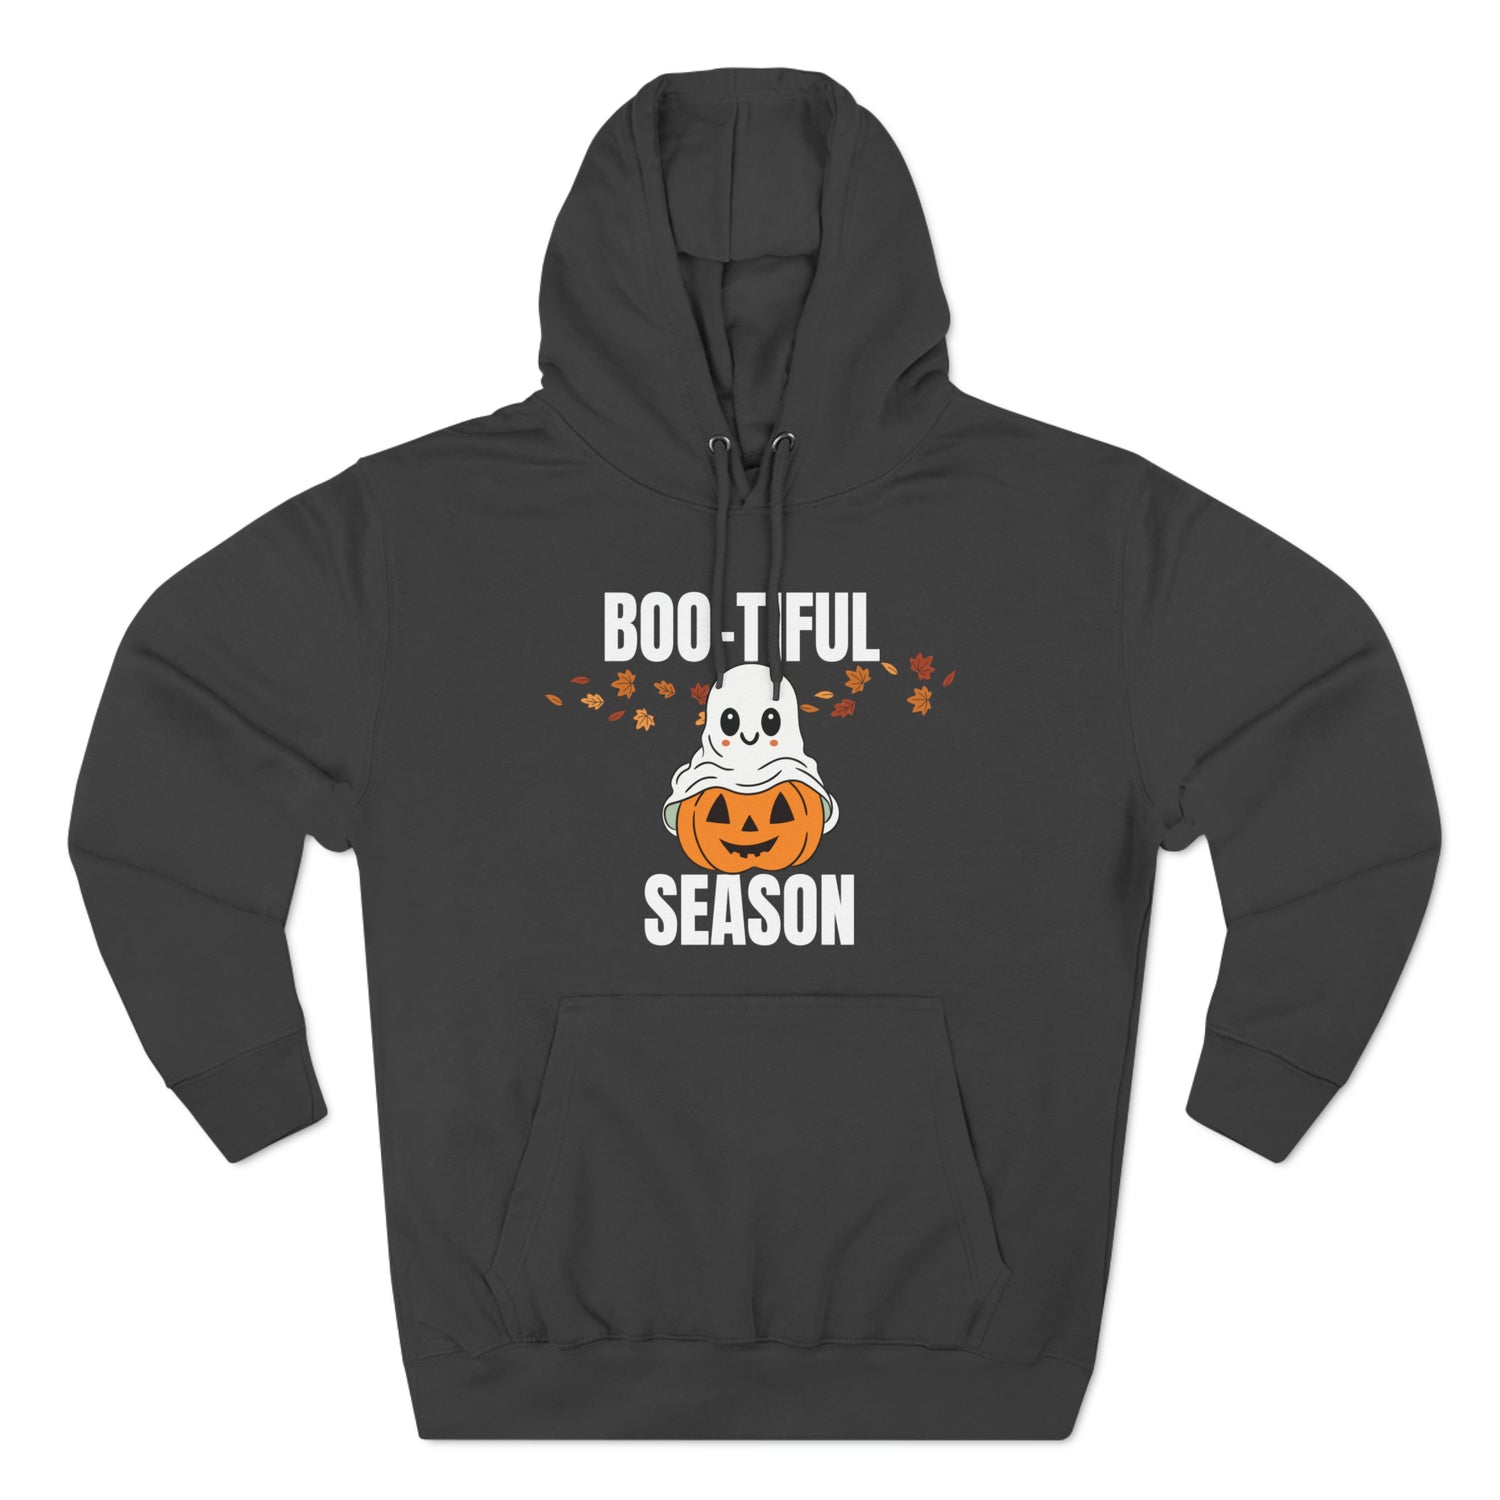 Charcoal Heather Hoodie Hoodie Halloween Sweatshirt for Spooky Hoodies Outfits this Fall Petrova Designs